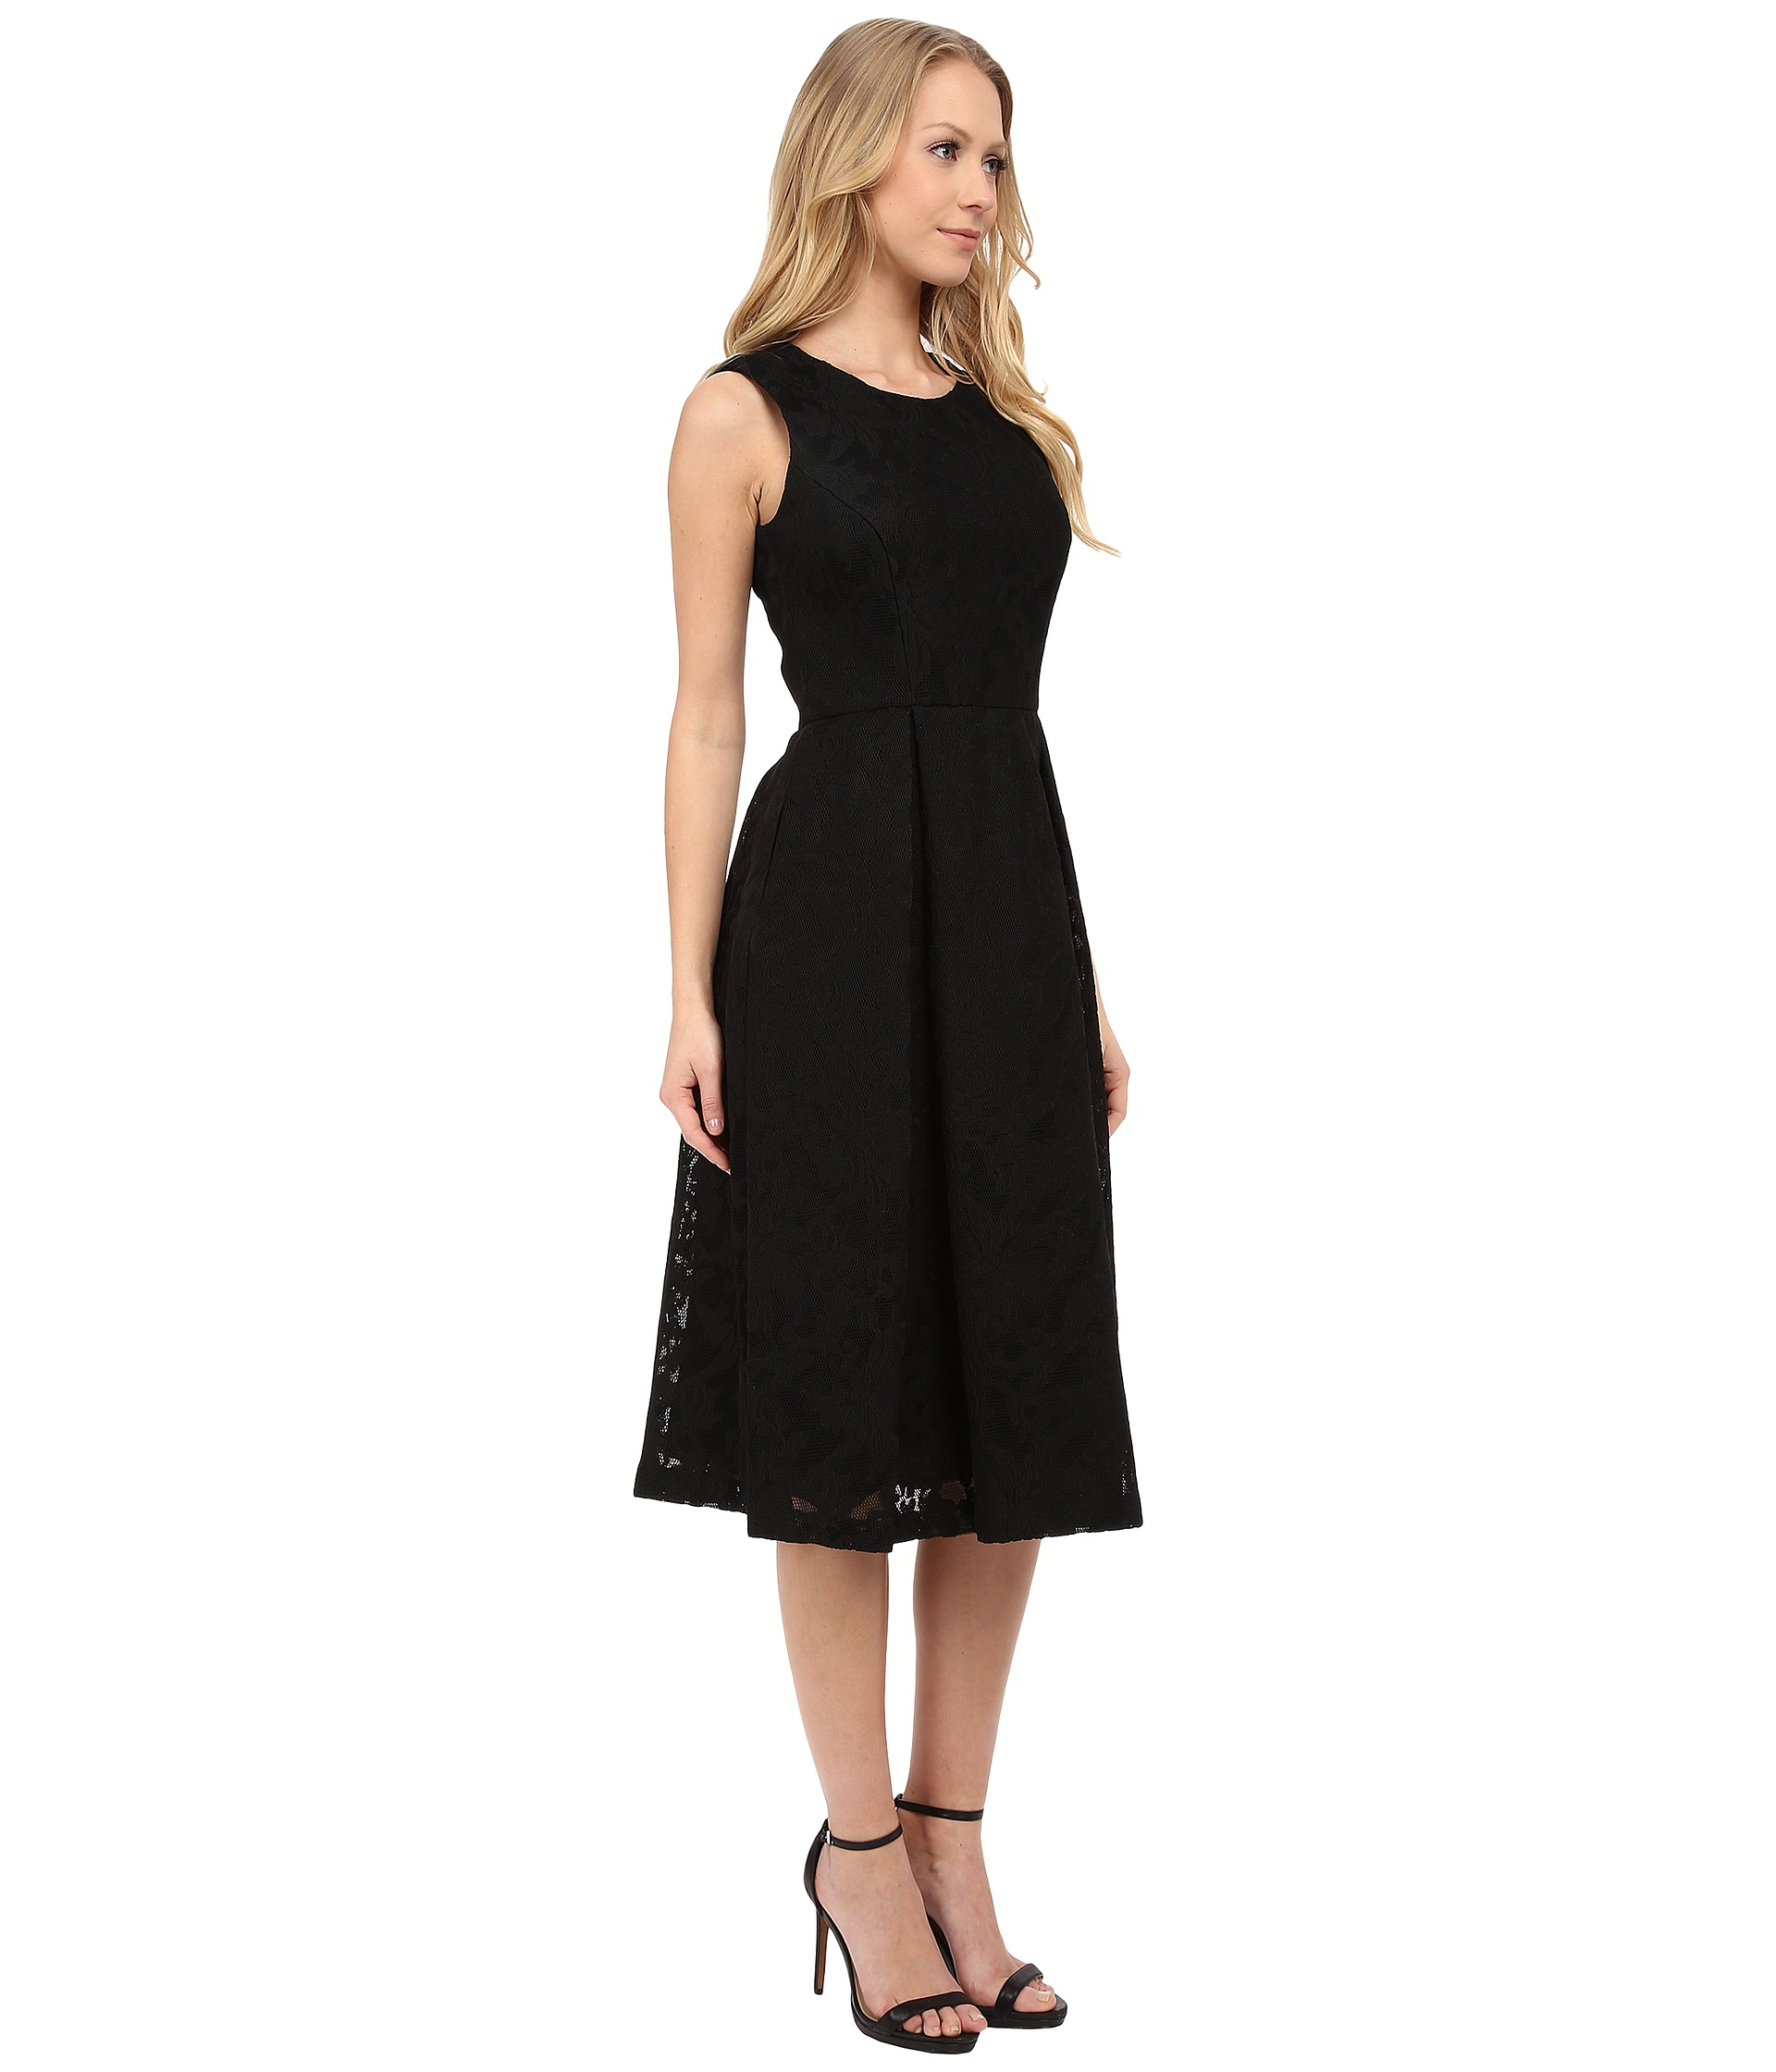 Lyst - Calvin Klein Sleeveless Fit & Flare Lace Scuba Dress in Black